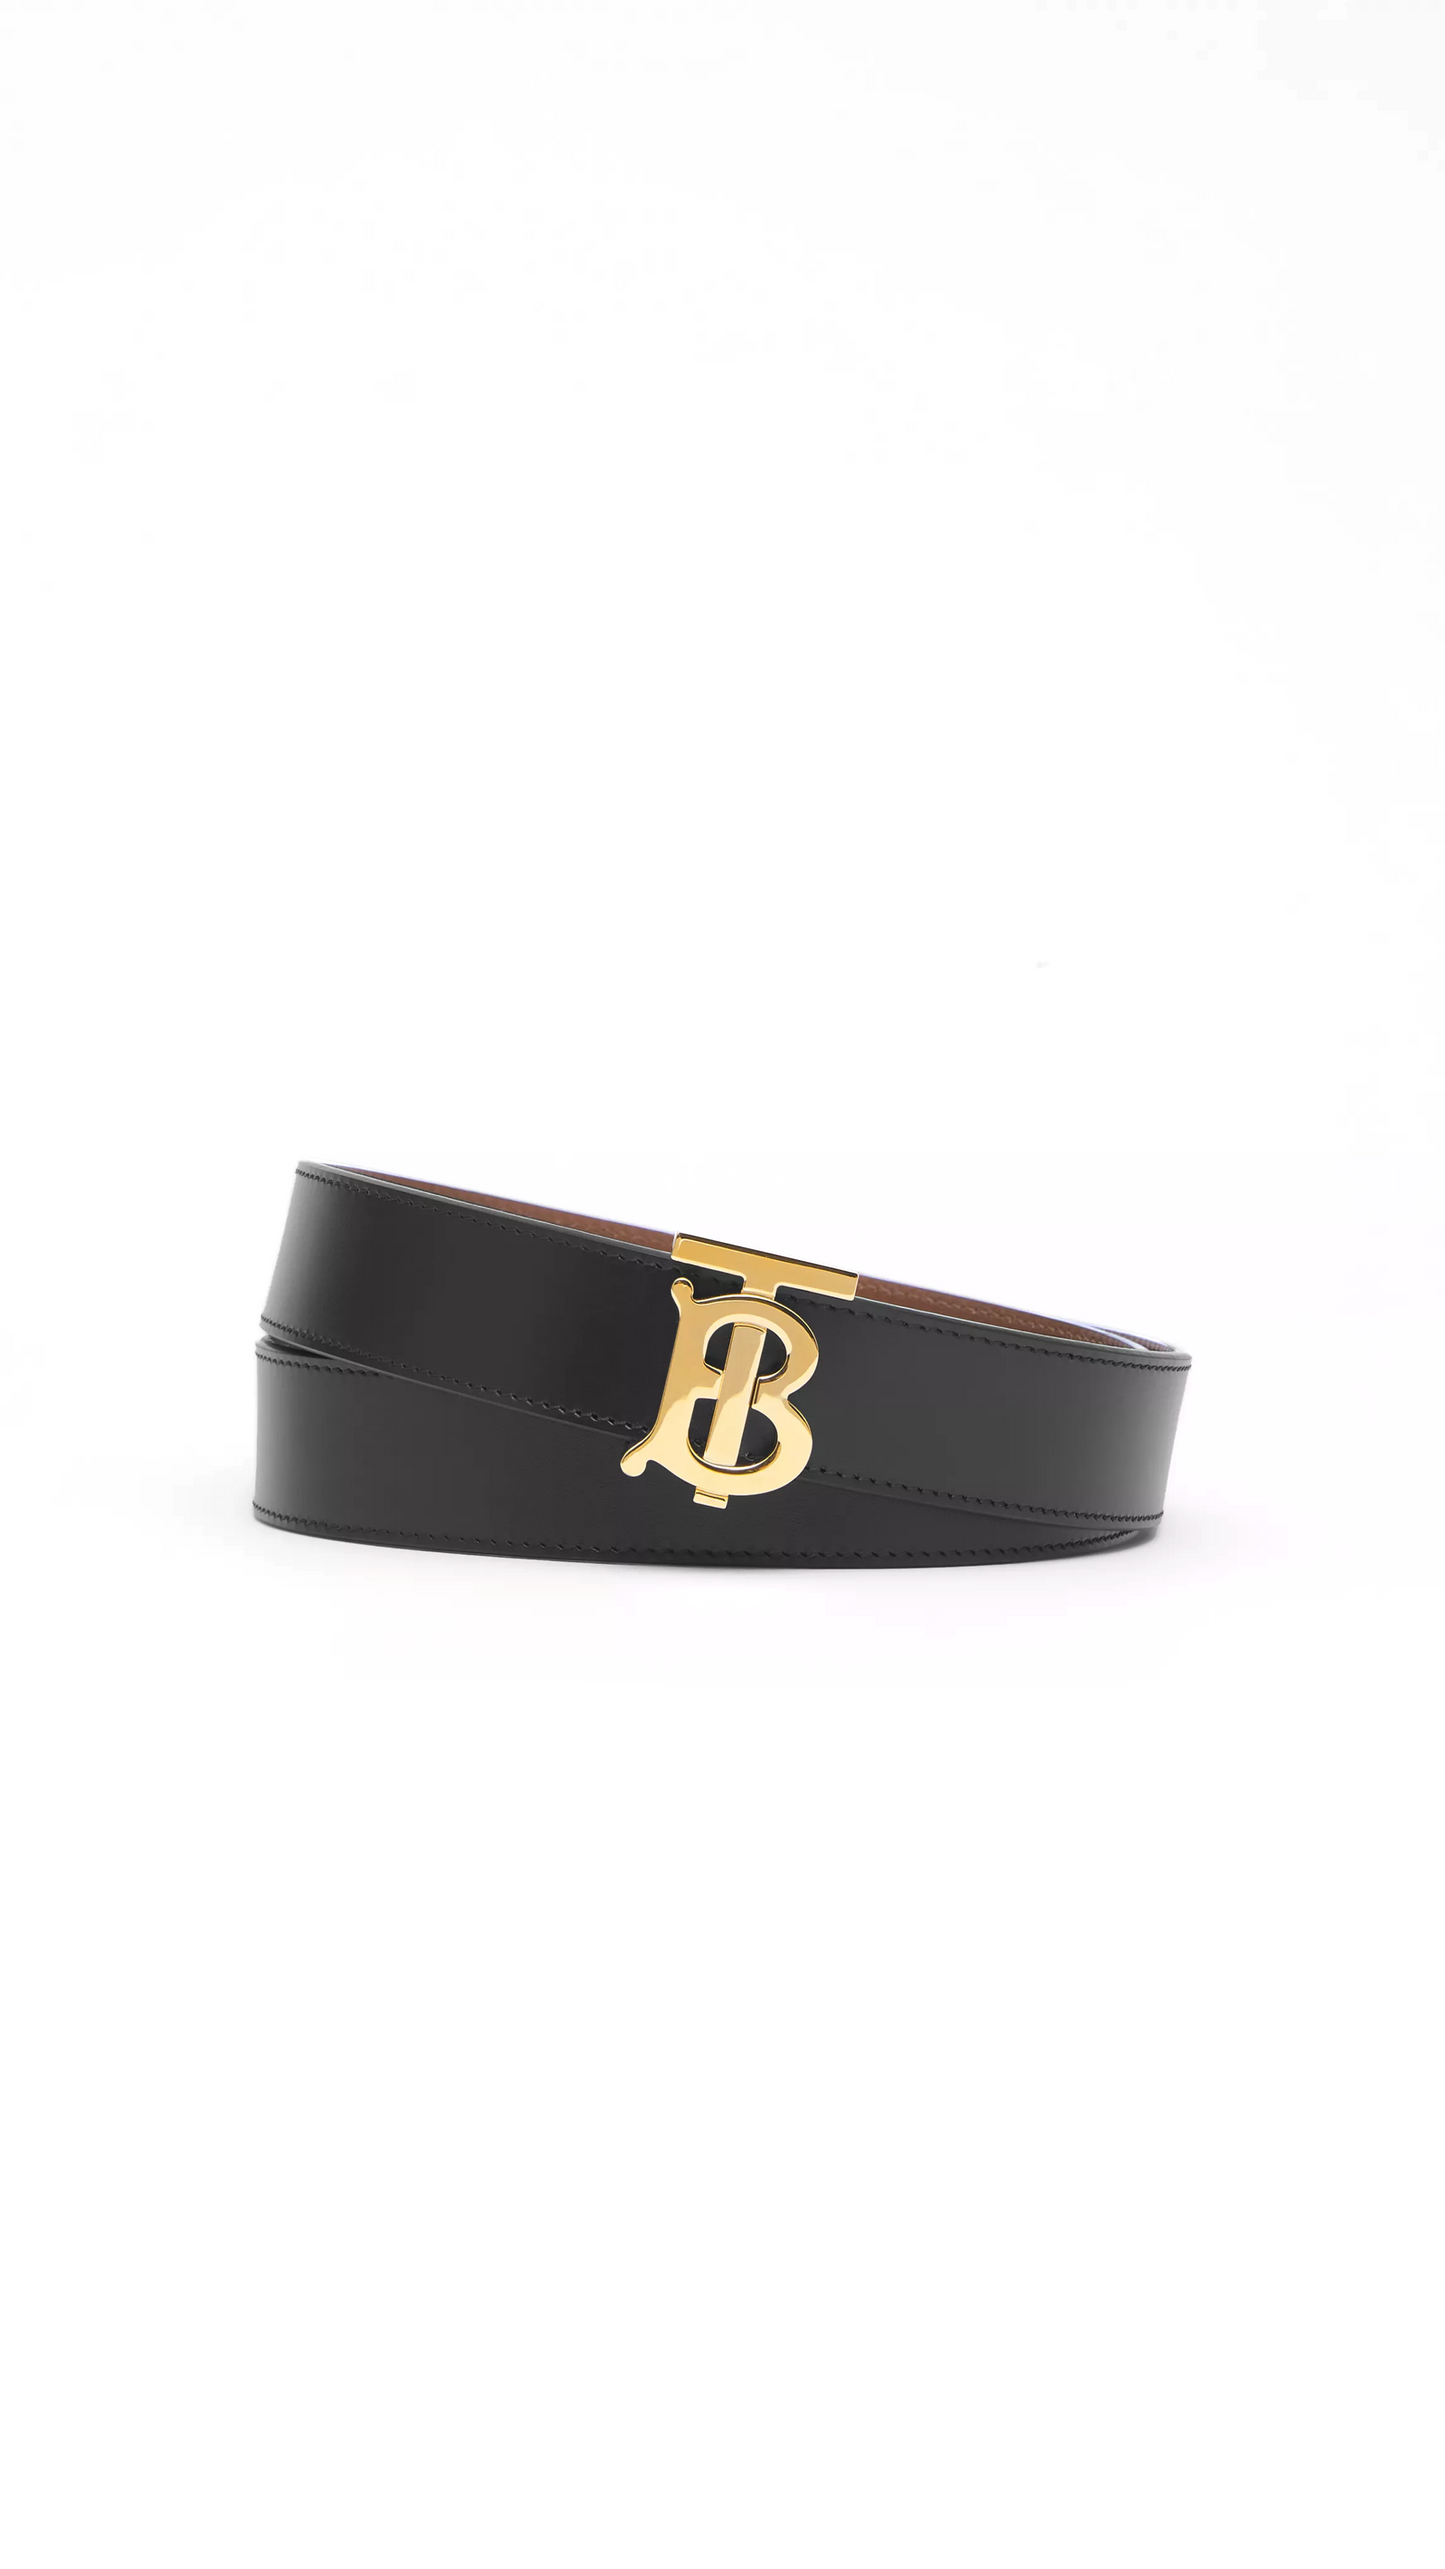 Reversible Monogram Motif Leather Belt - Black / Tan / Gold